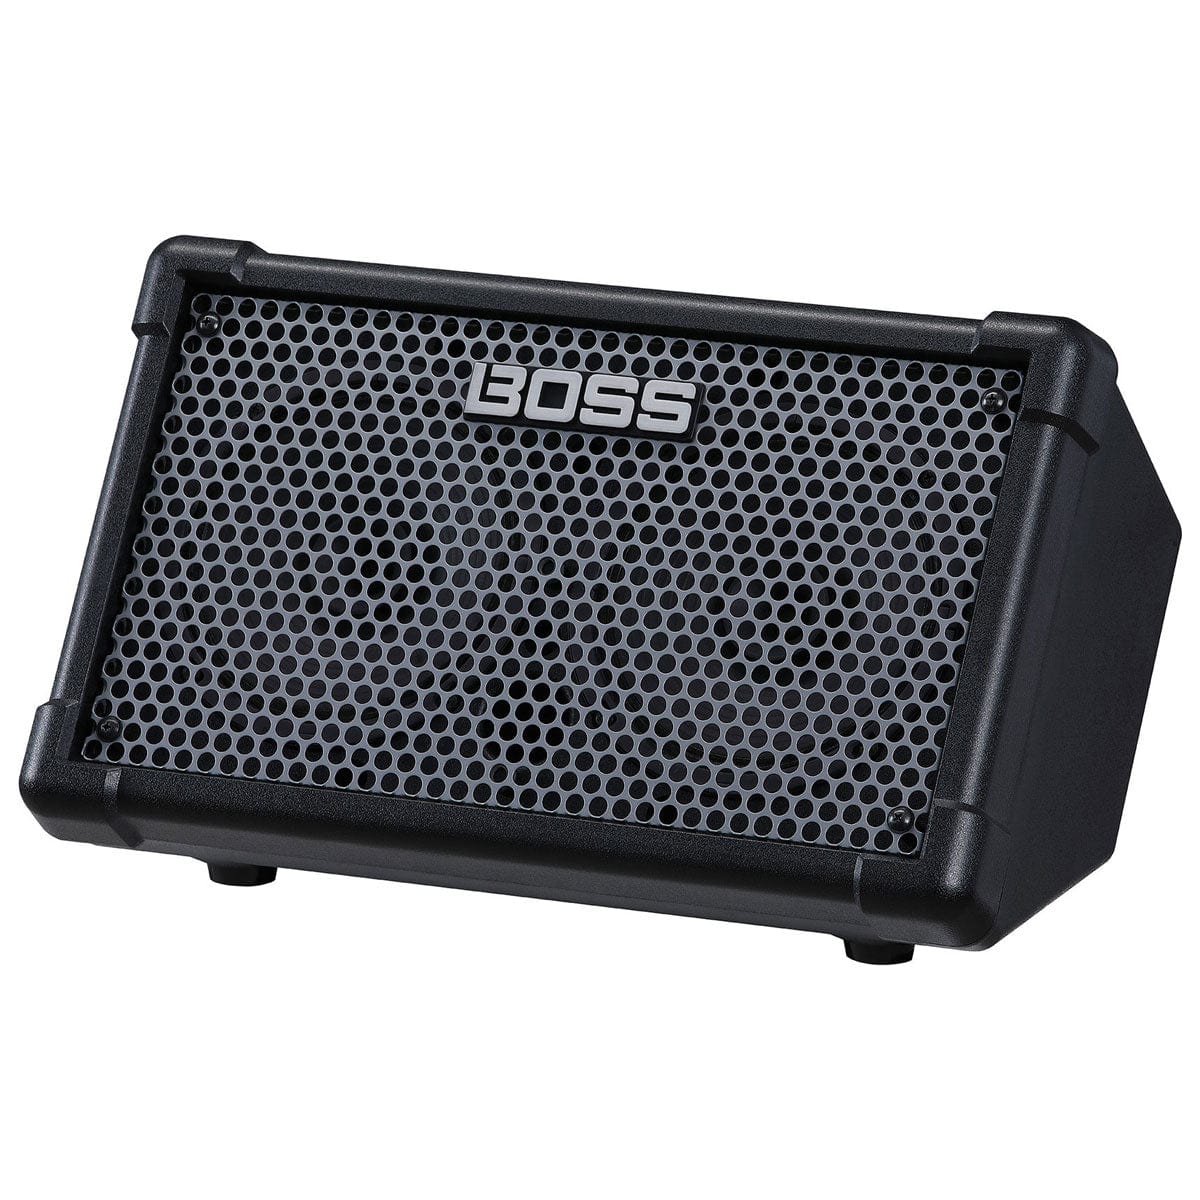 Boss Amps Boss Cube Street II Battery Powered Amplifier Black - Byron Music